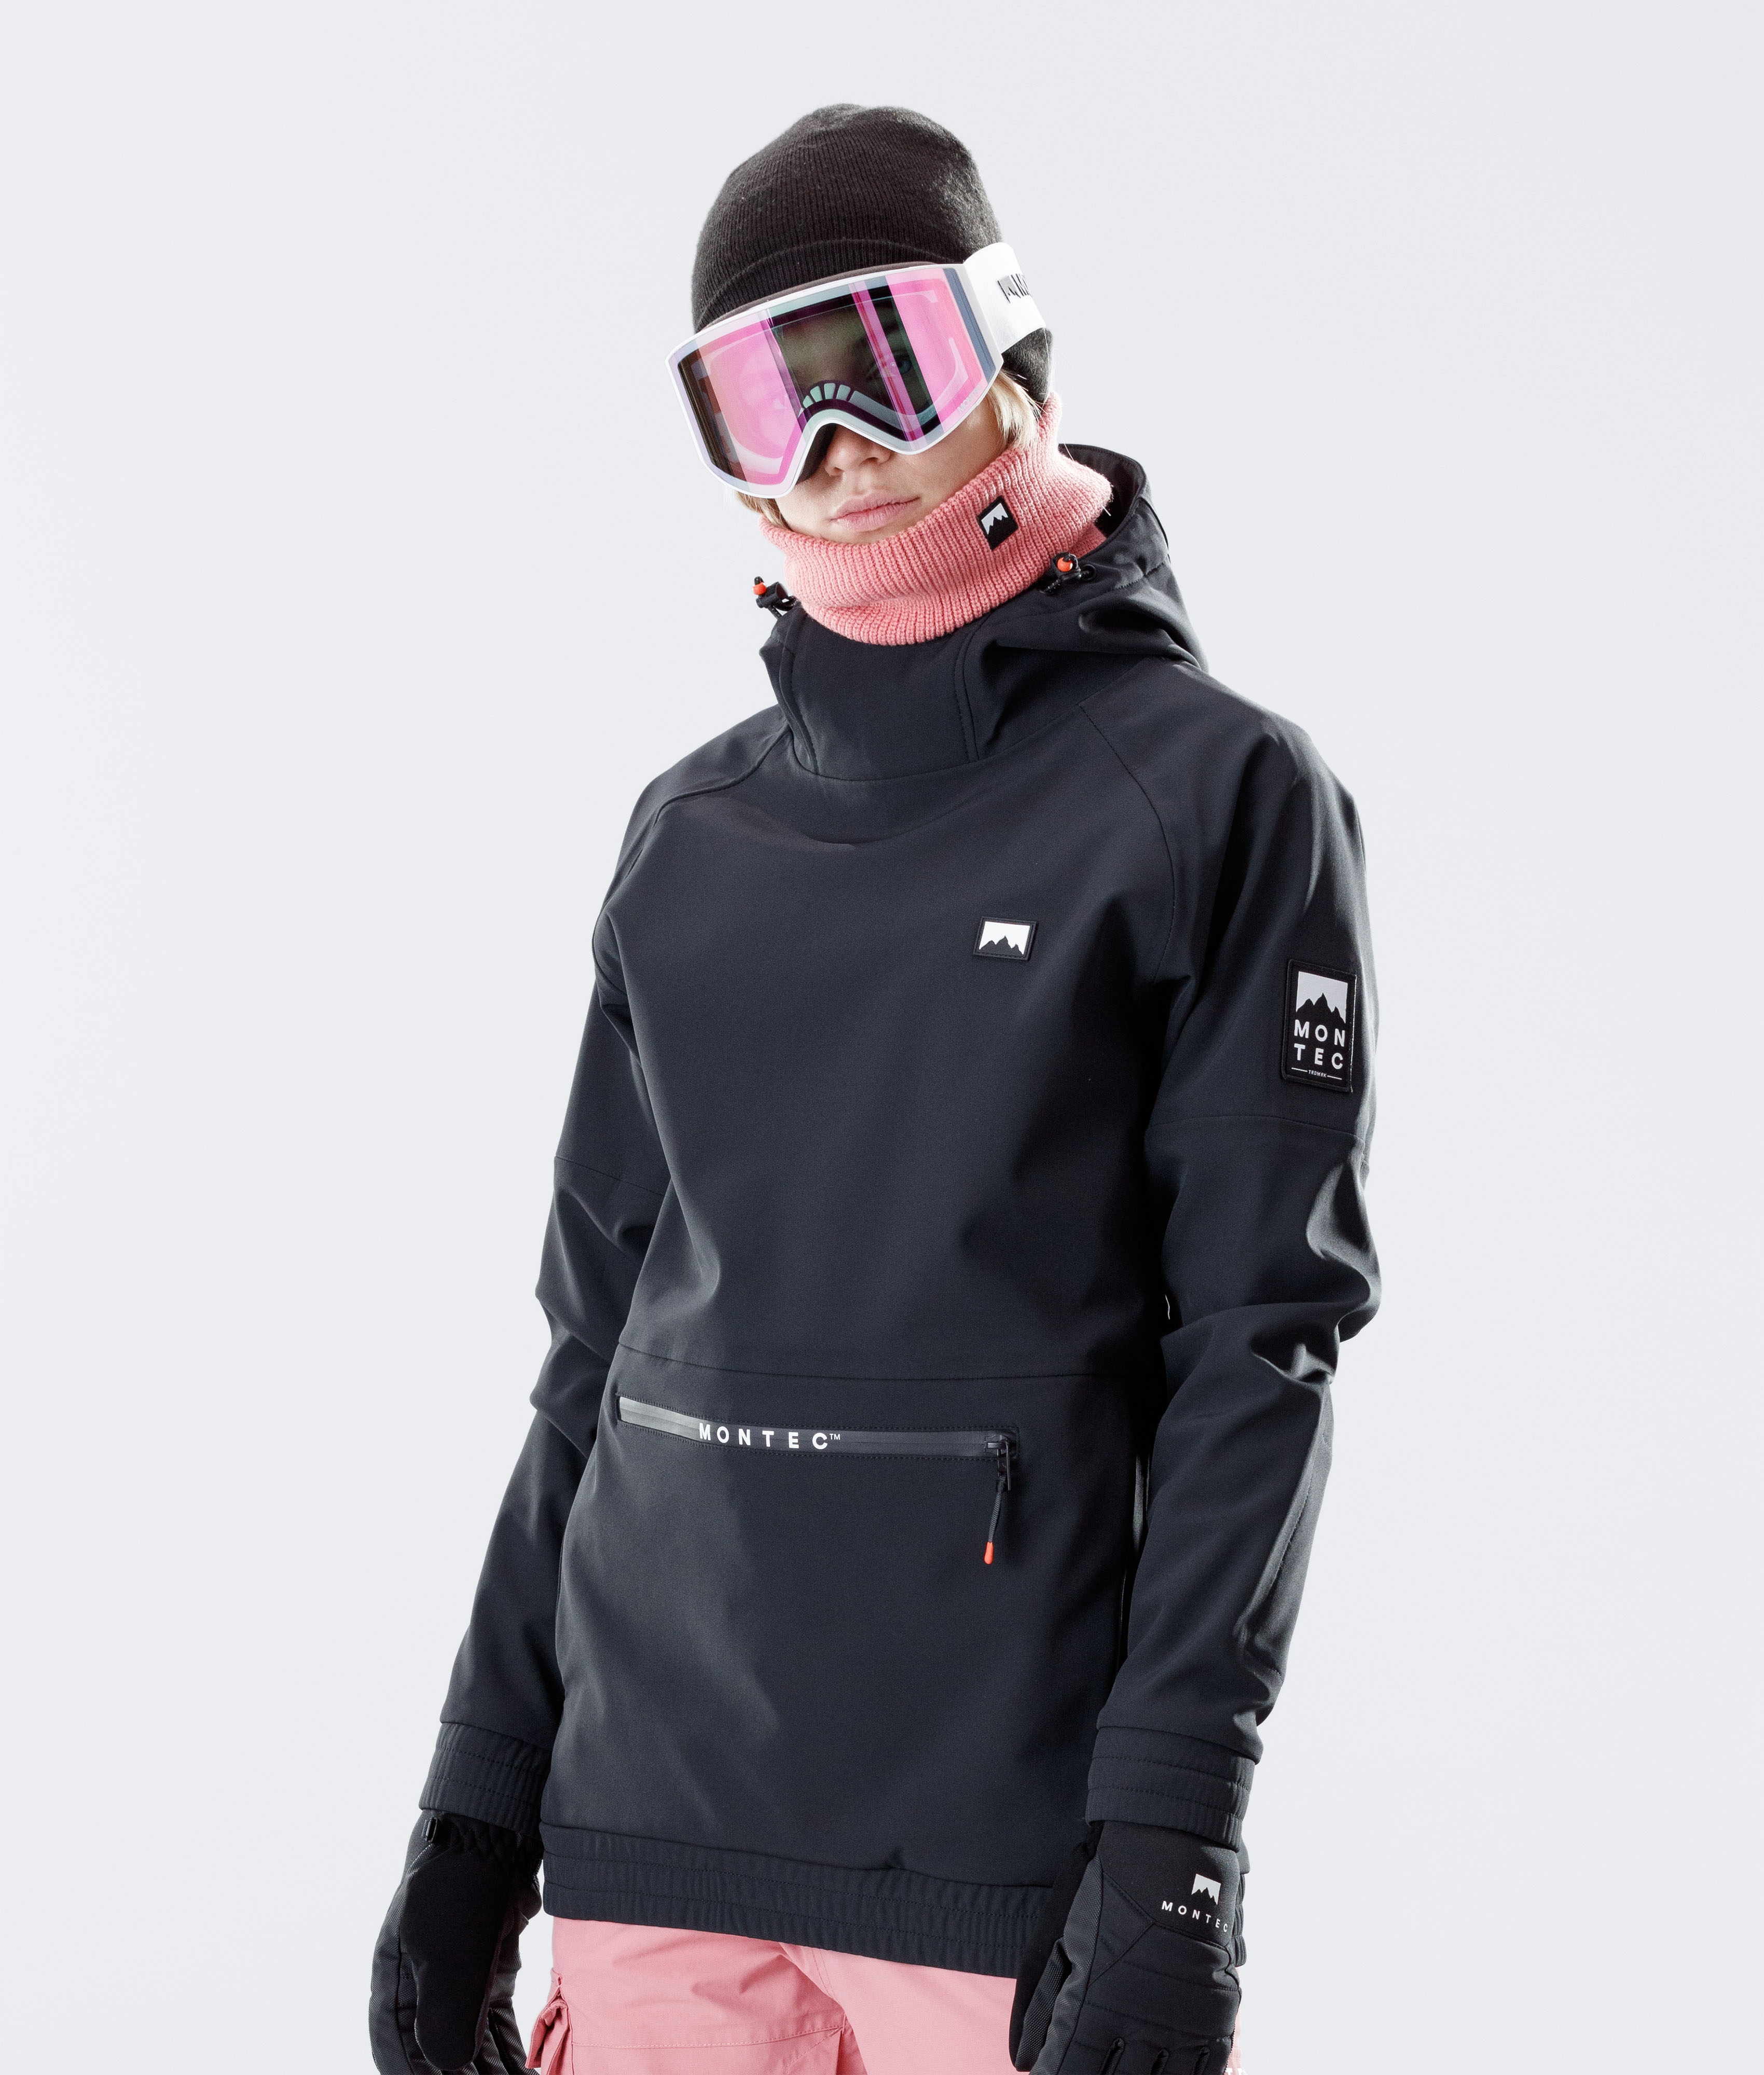 sport expert manteau ski femme